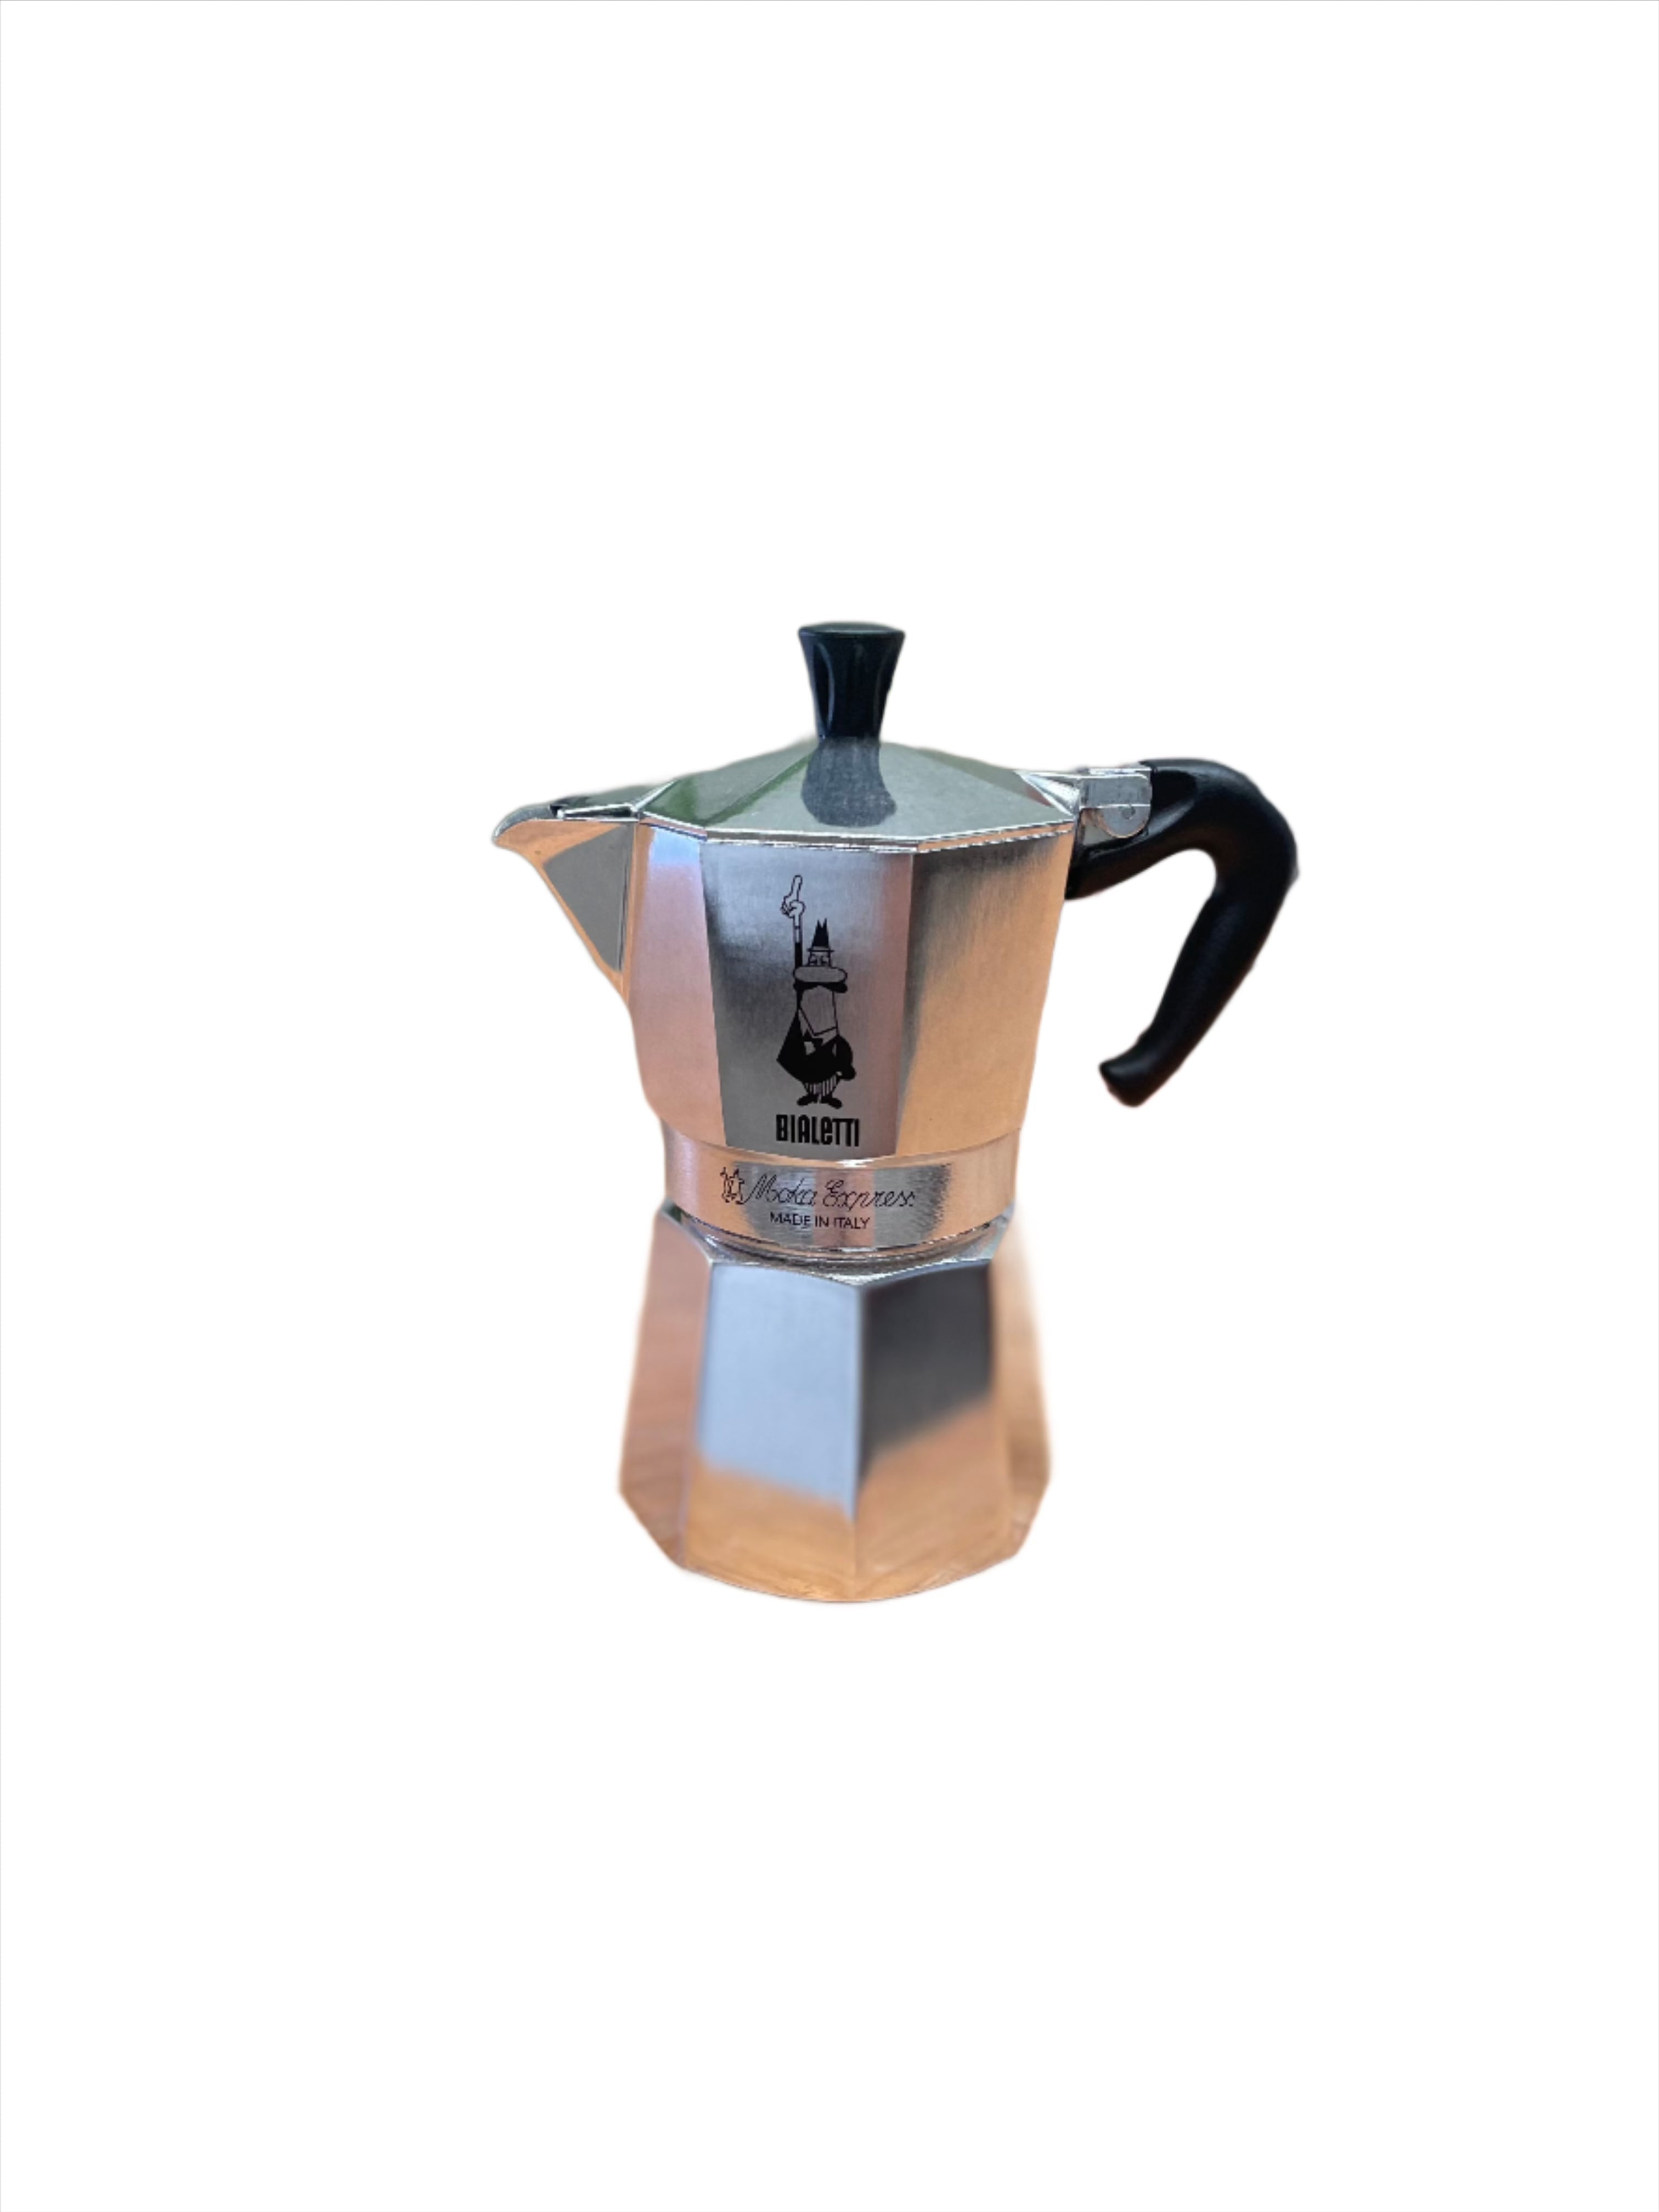 Bialetti Moka Express Espresso Makers - 1 cup